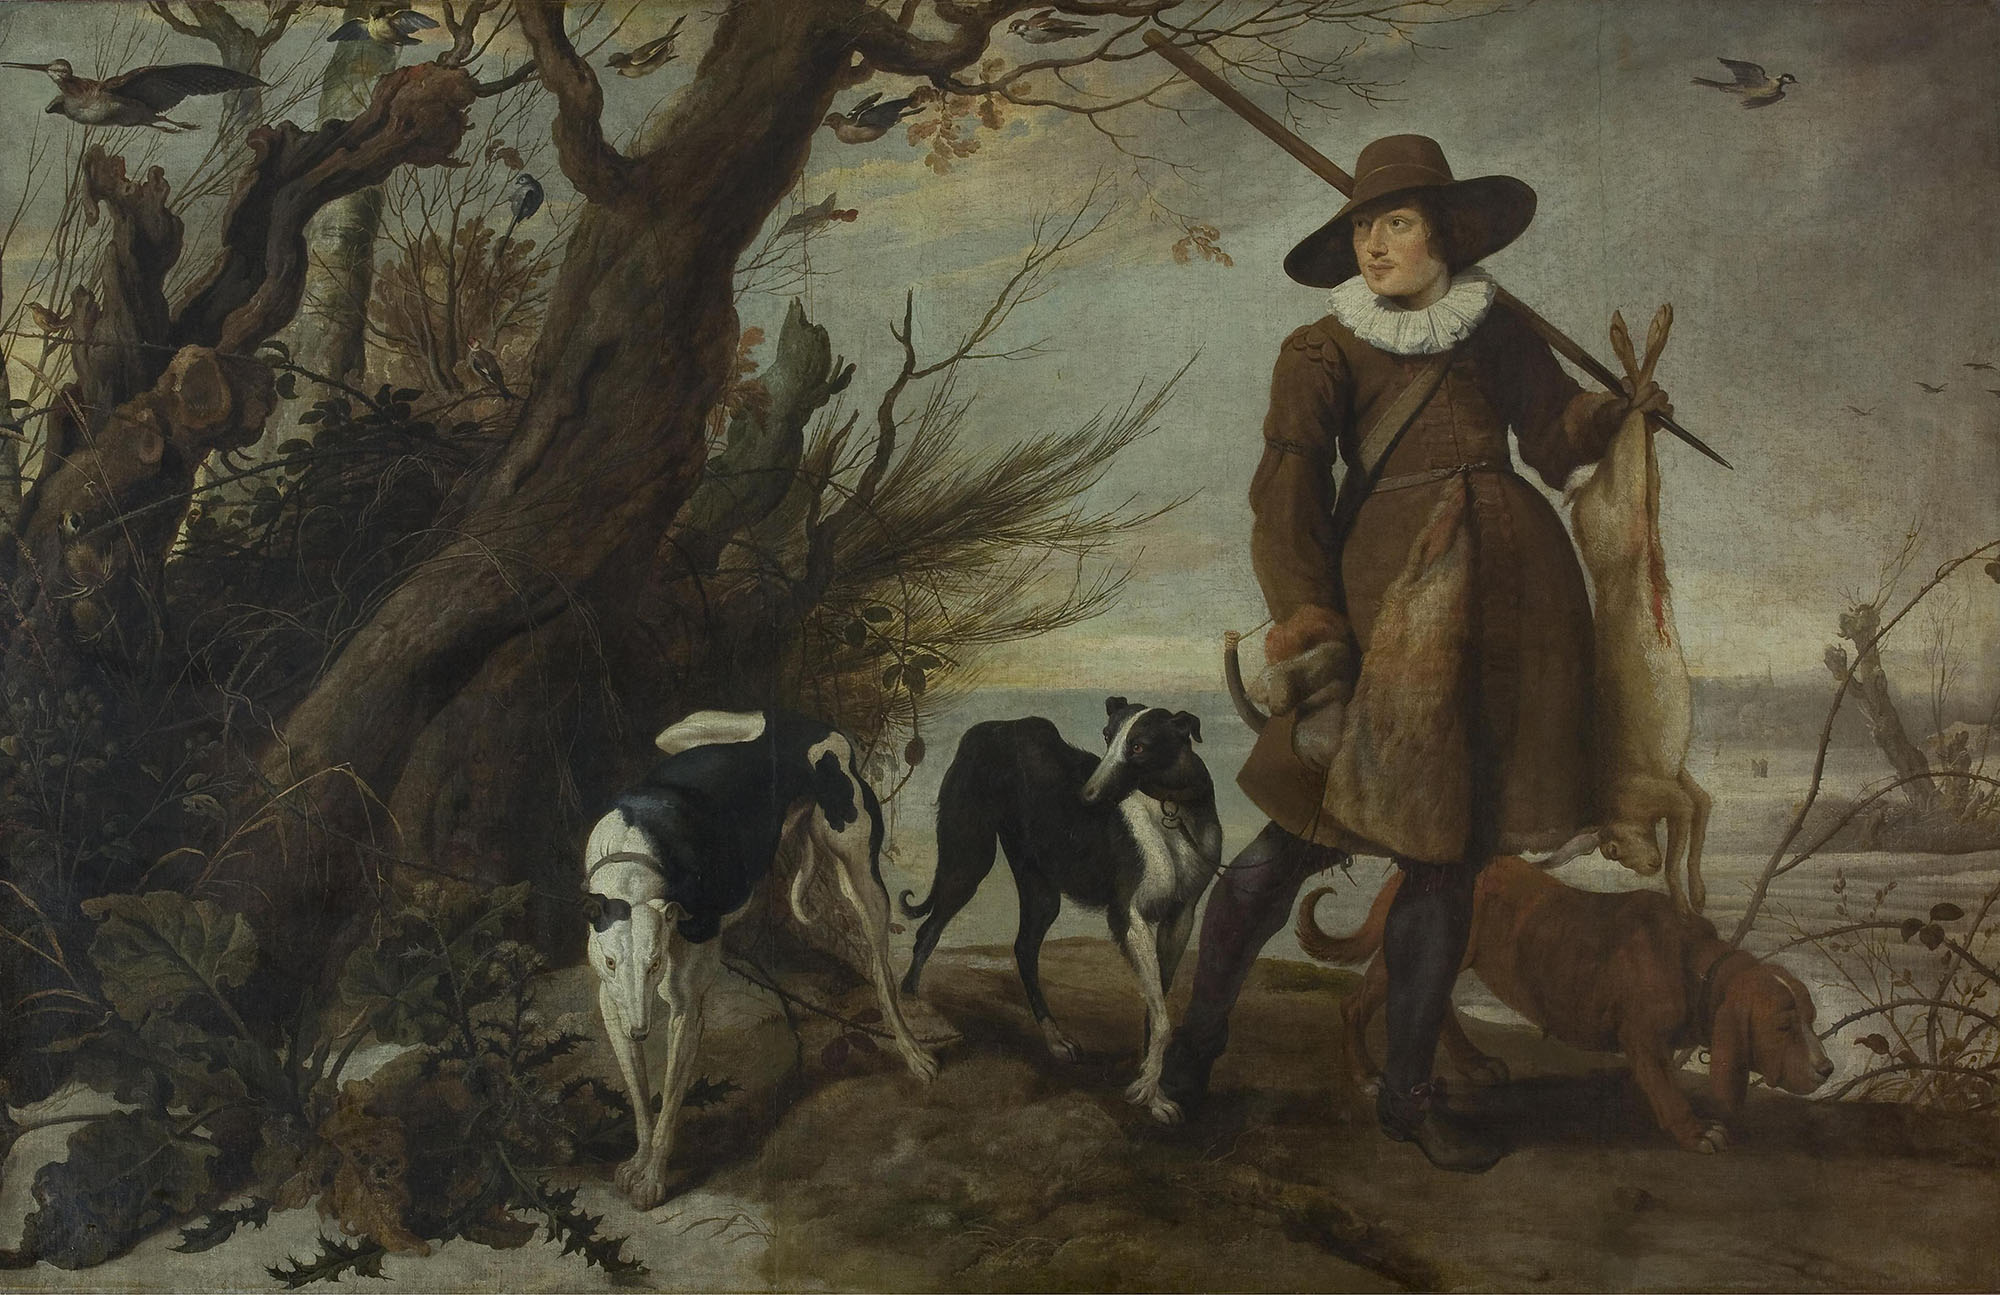 Ян Вильденс. "Охотник с собаками на фоне пейзажа". 1625. Эрмитаж, Санкт-Петербург.